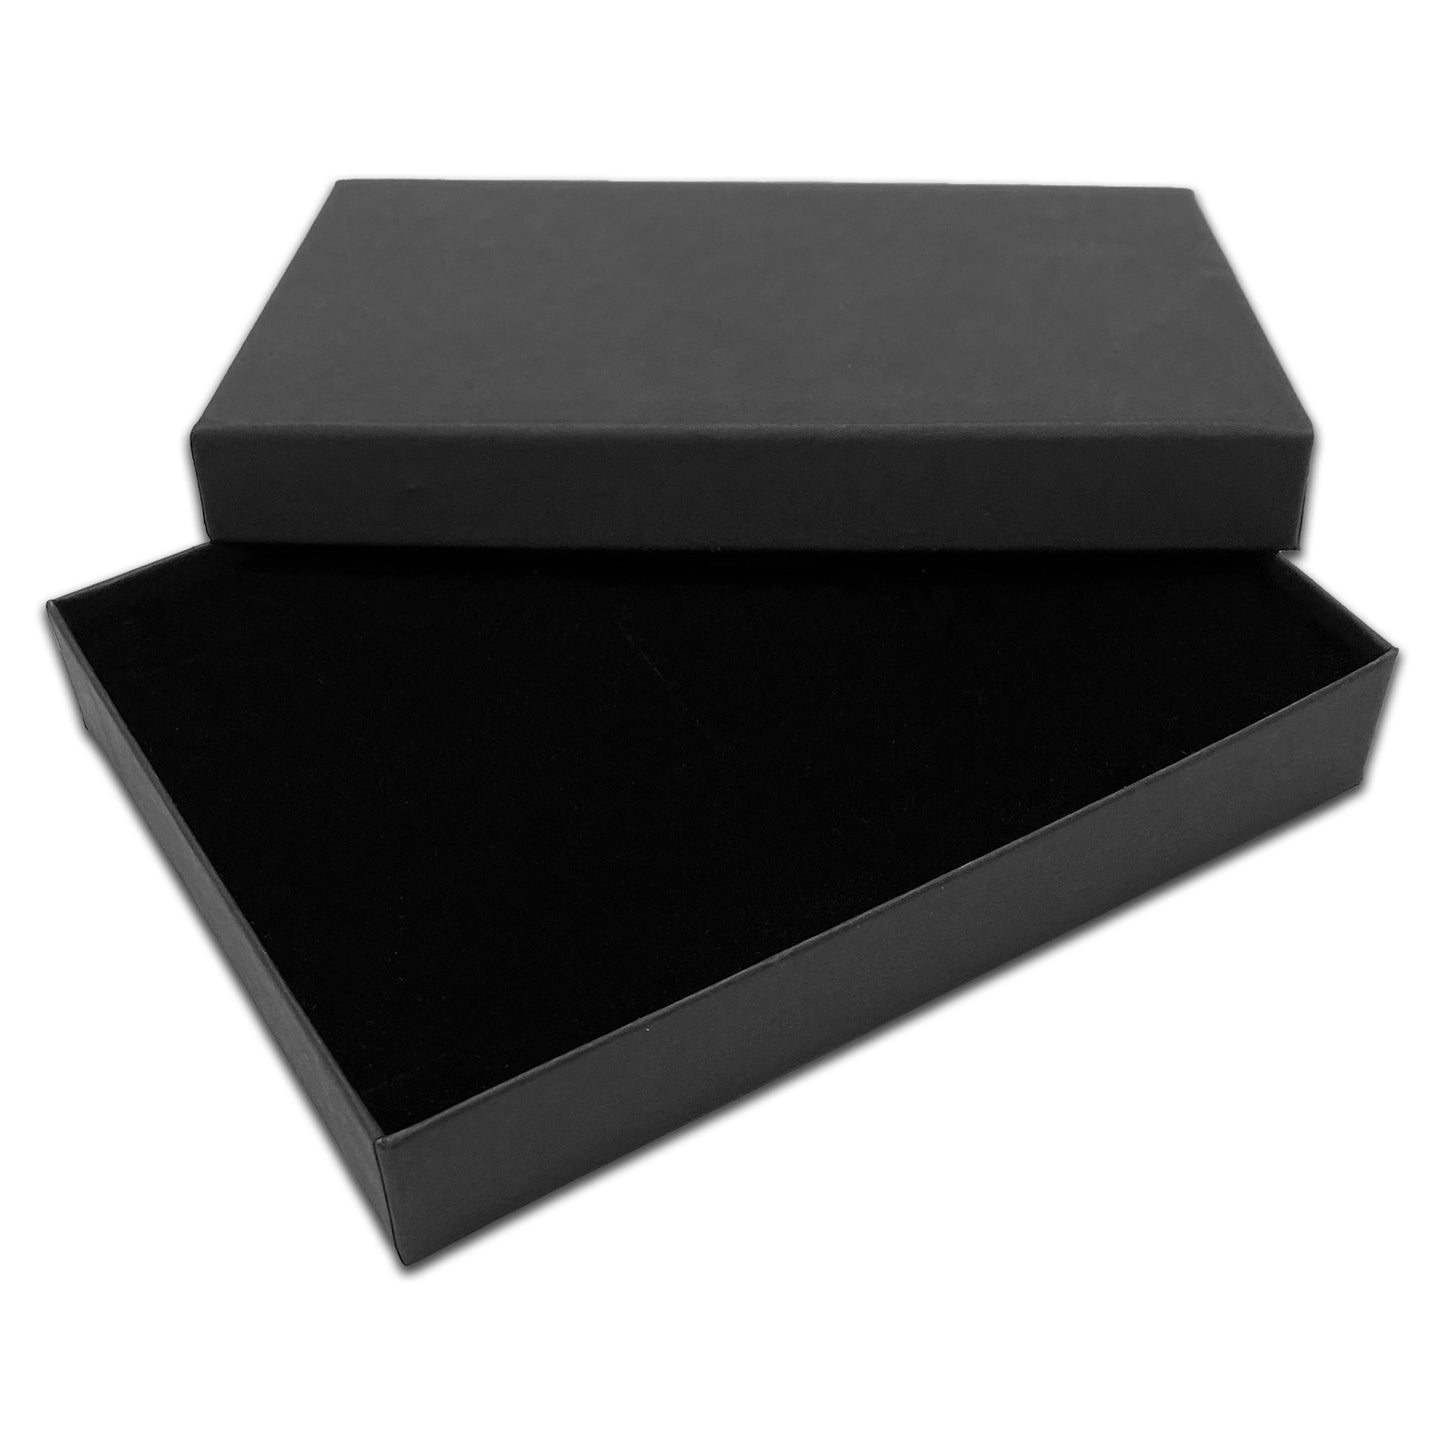 5 7/16" x 3 15/16" Black Combination Paper Box with Black Foam Insert